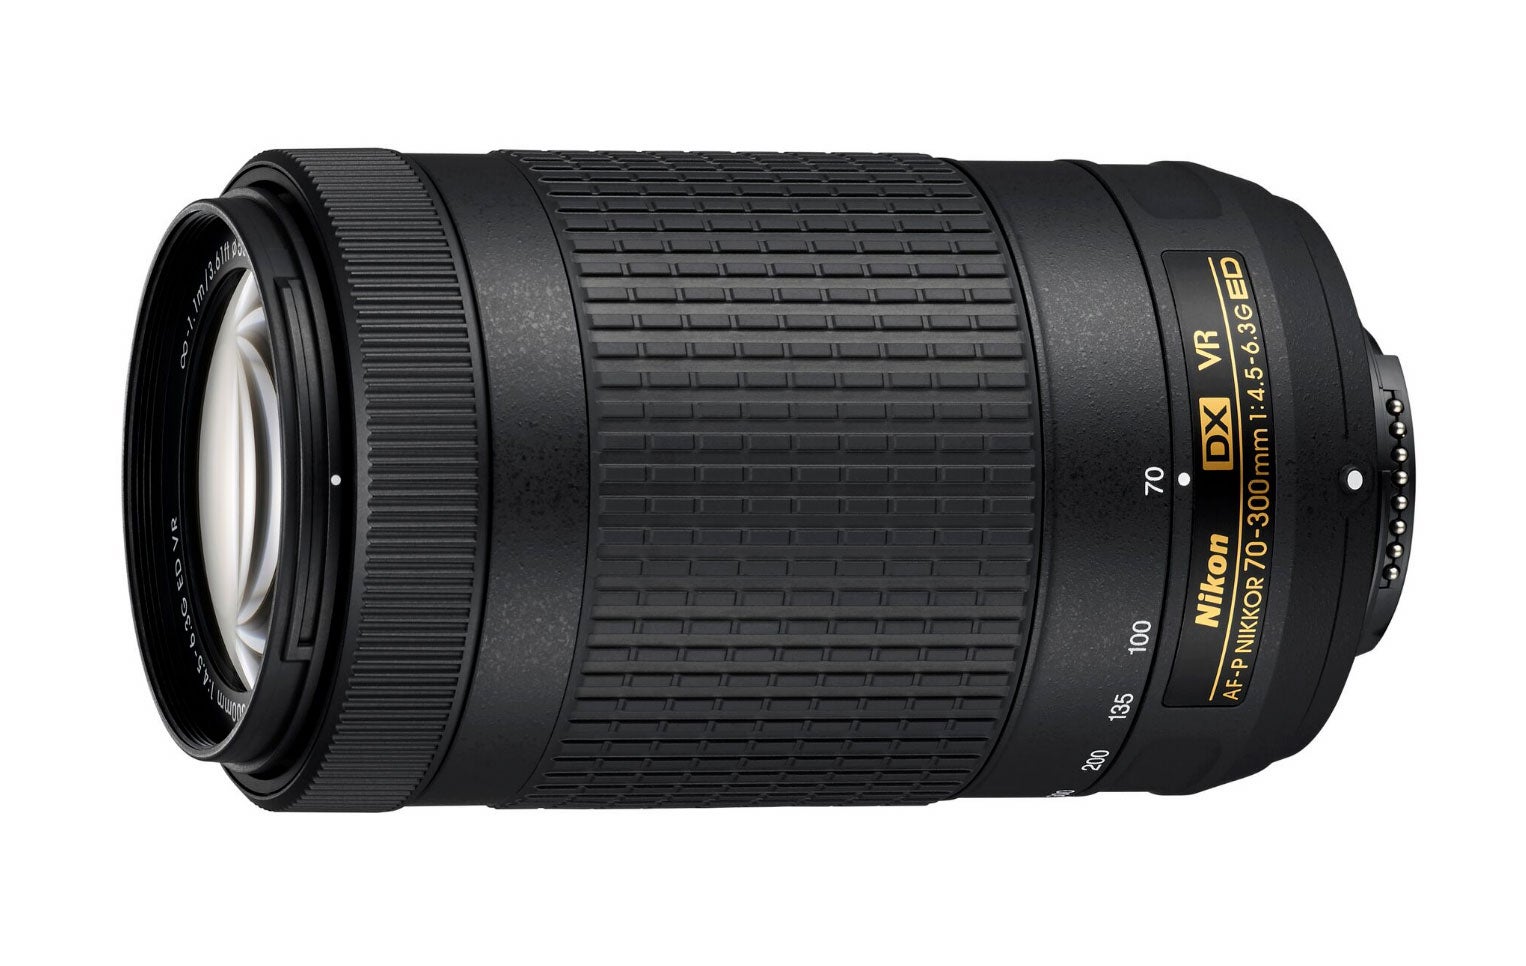 Nikon Announced D3400 DSLR, Plus New 18-55mm And 70-300mm Zoom Lenses